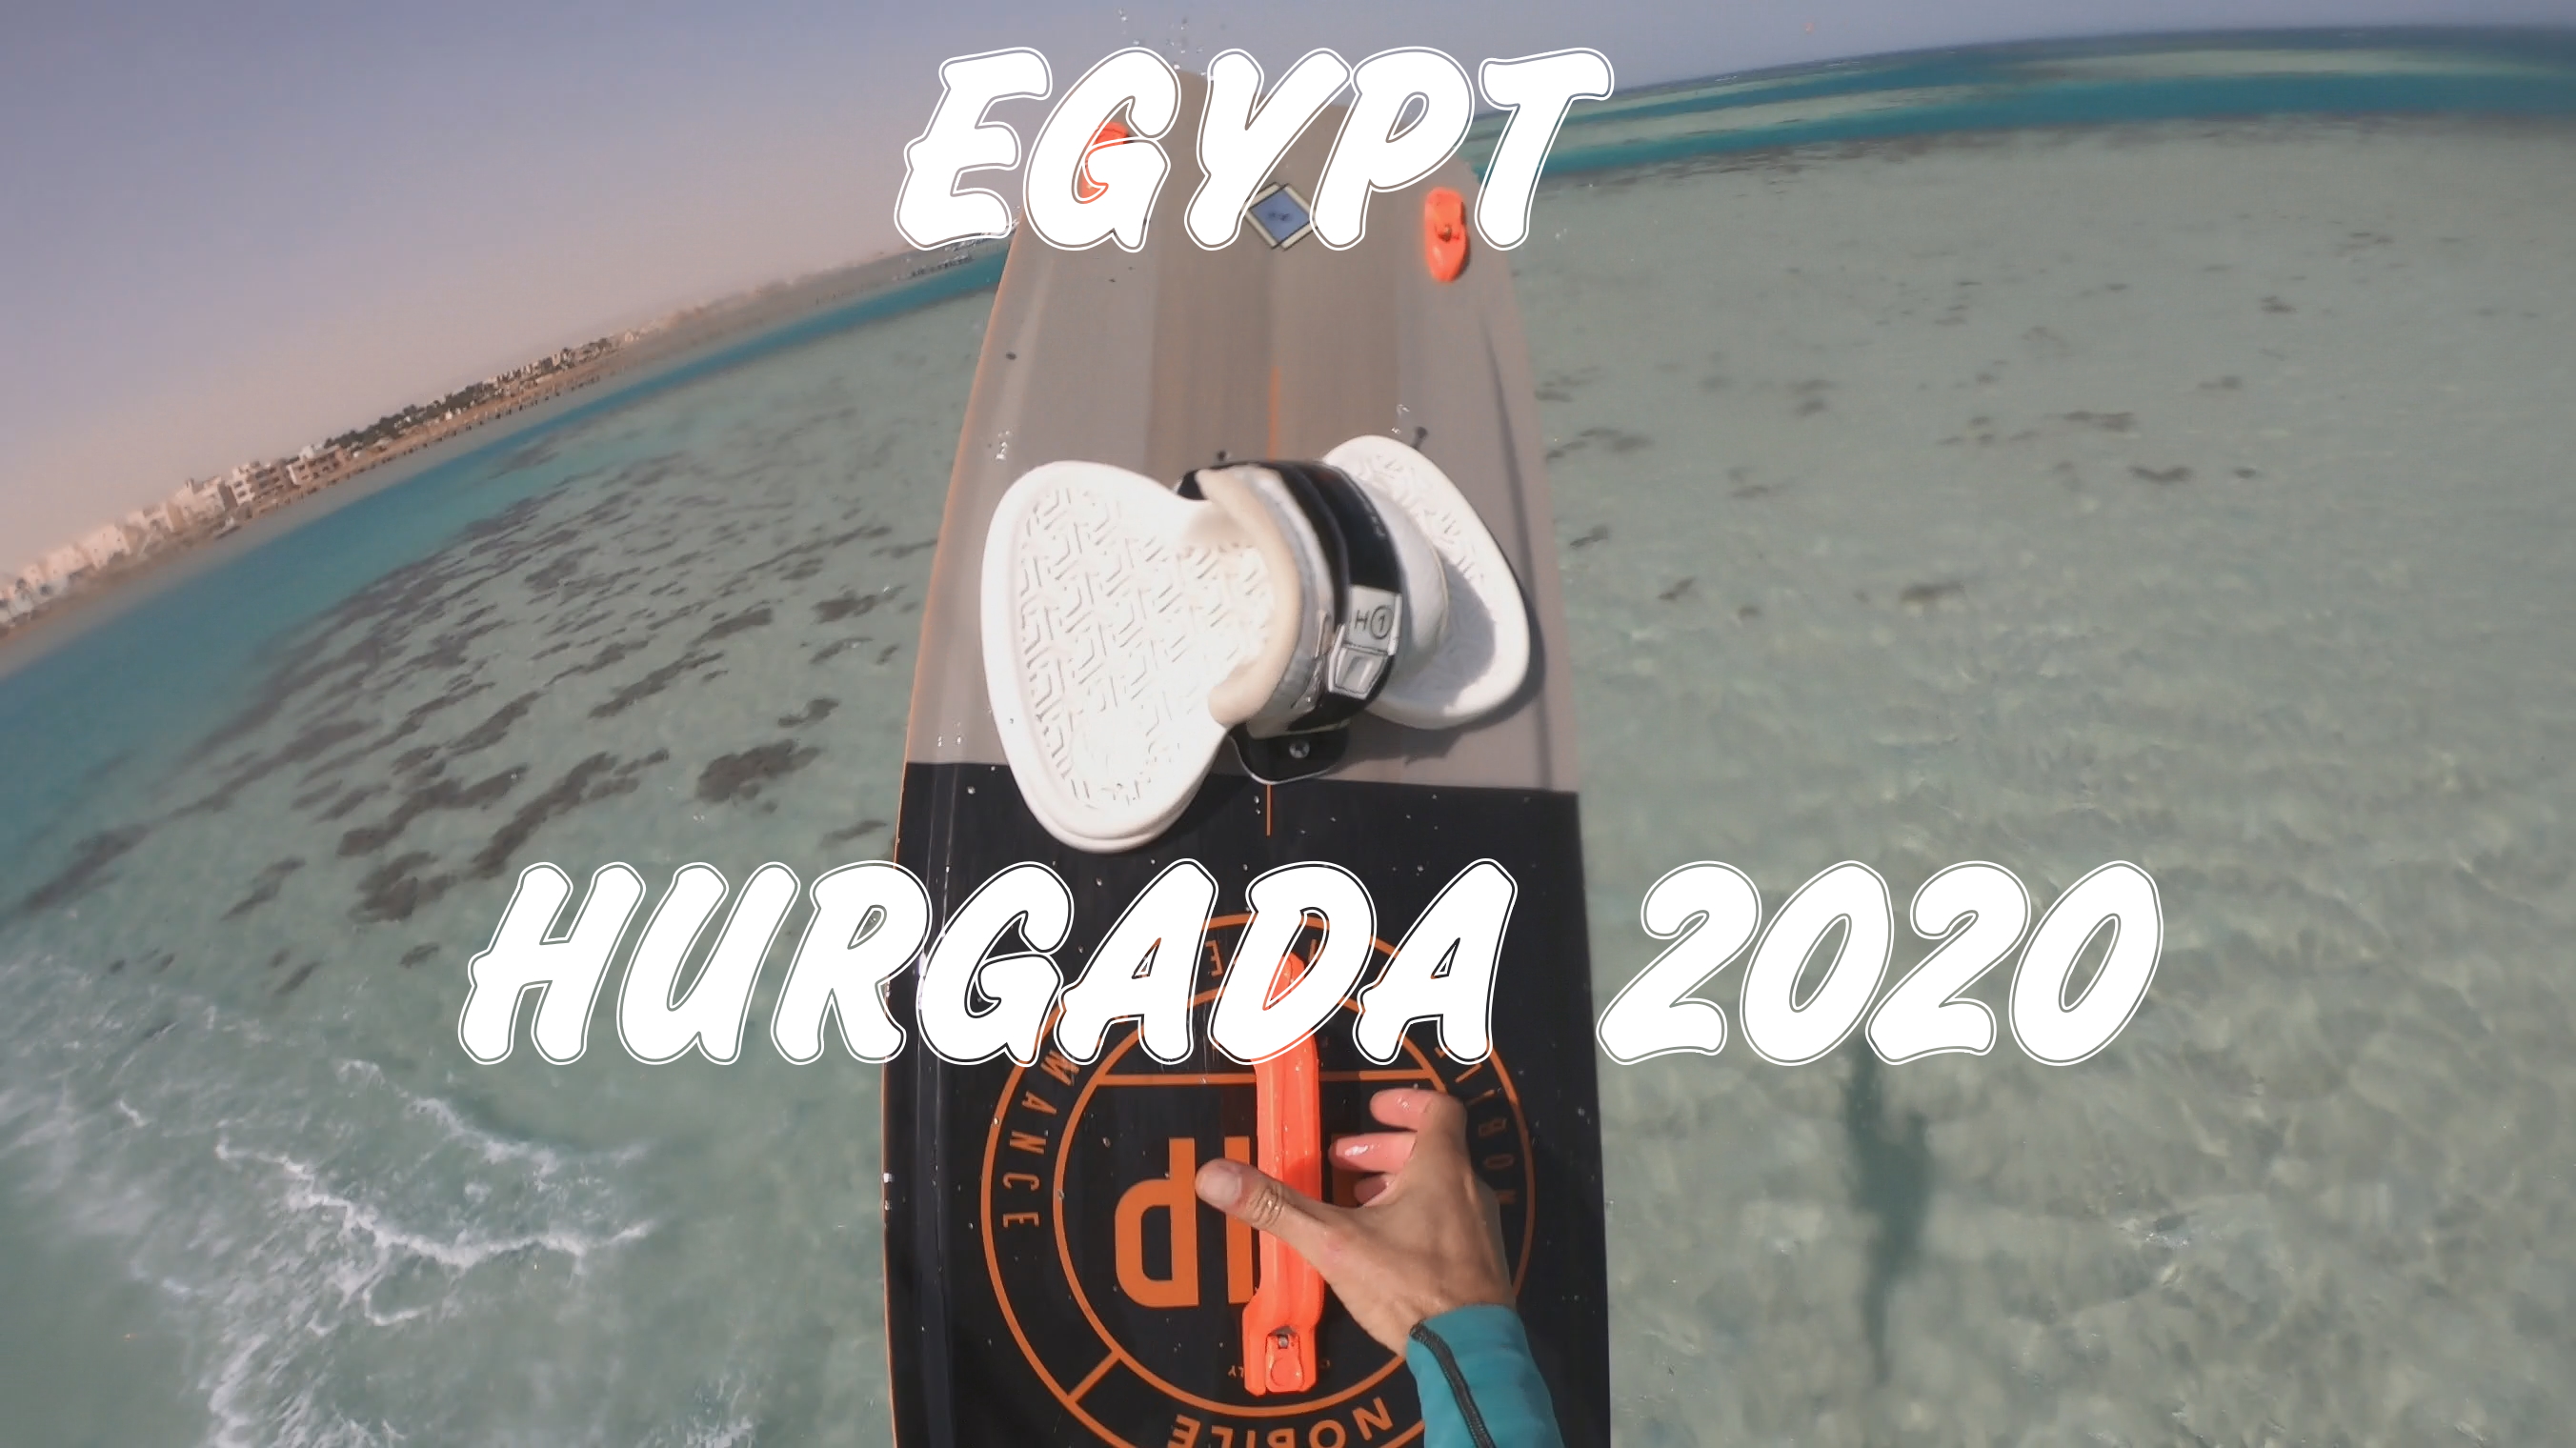 kitesurfing egypt Hurgada in november 2020